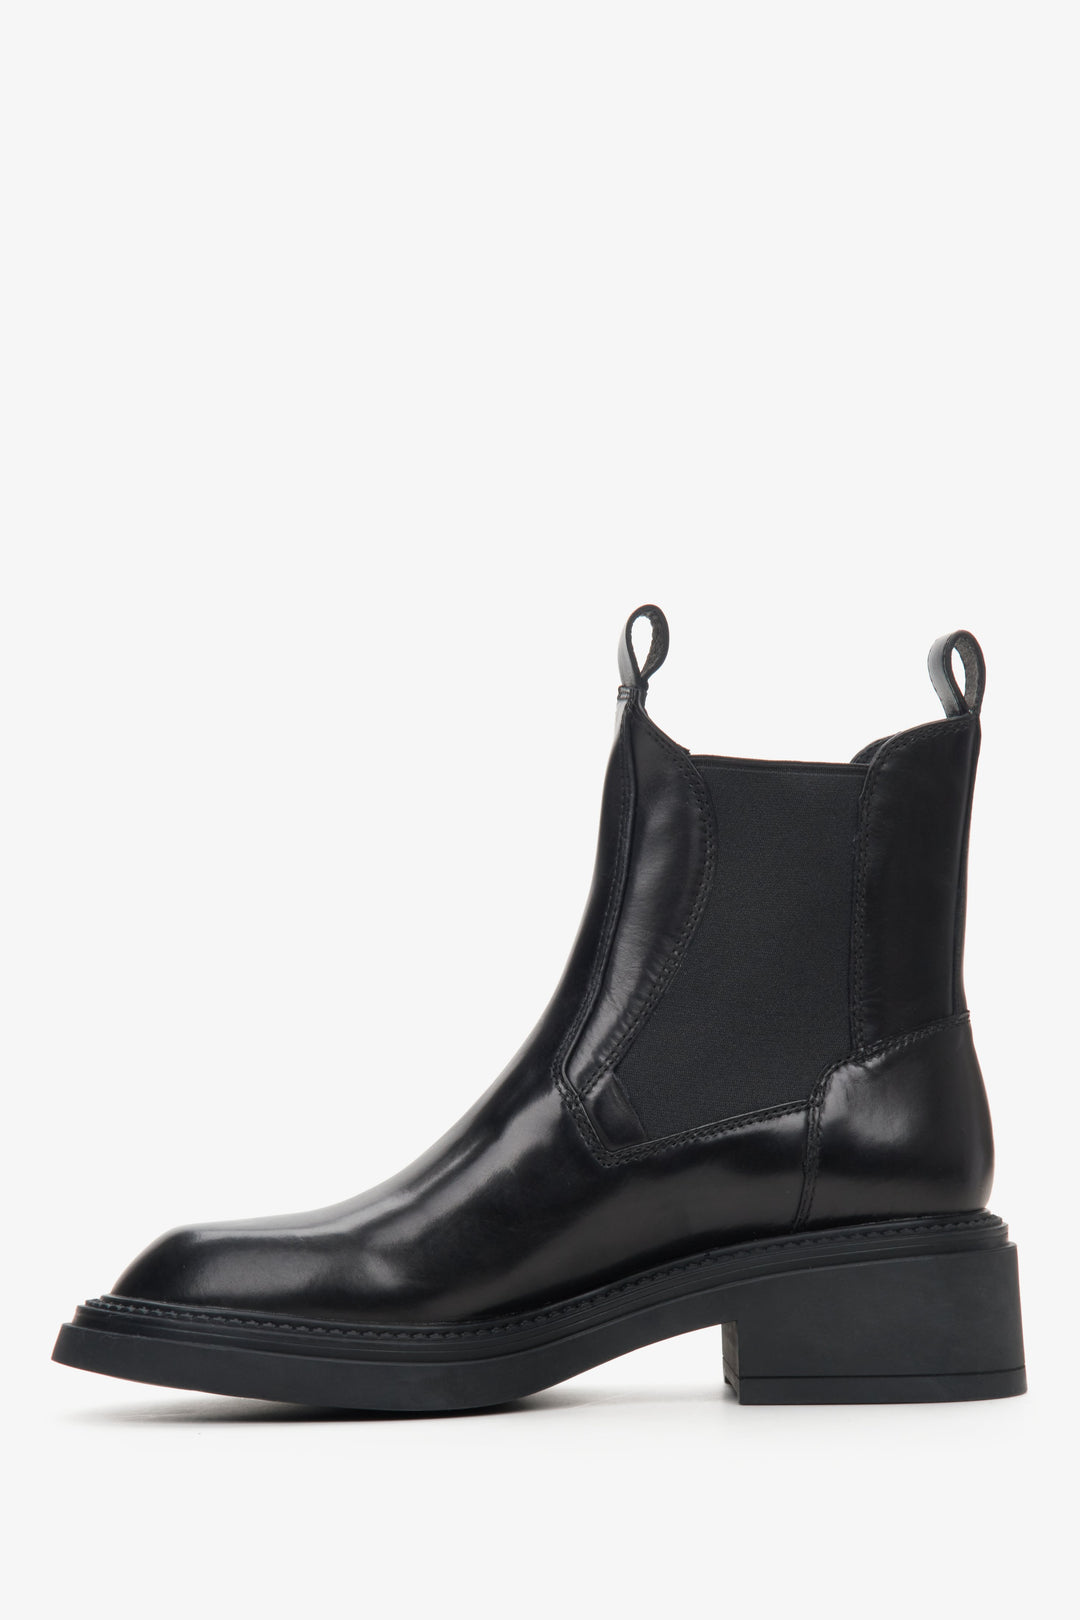 Black leather chelsea boots - shoe profile.